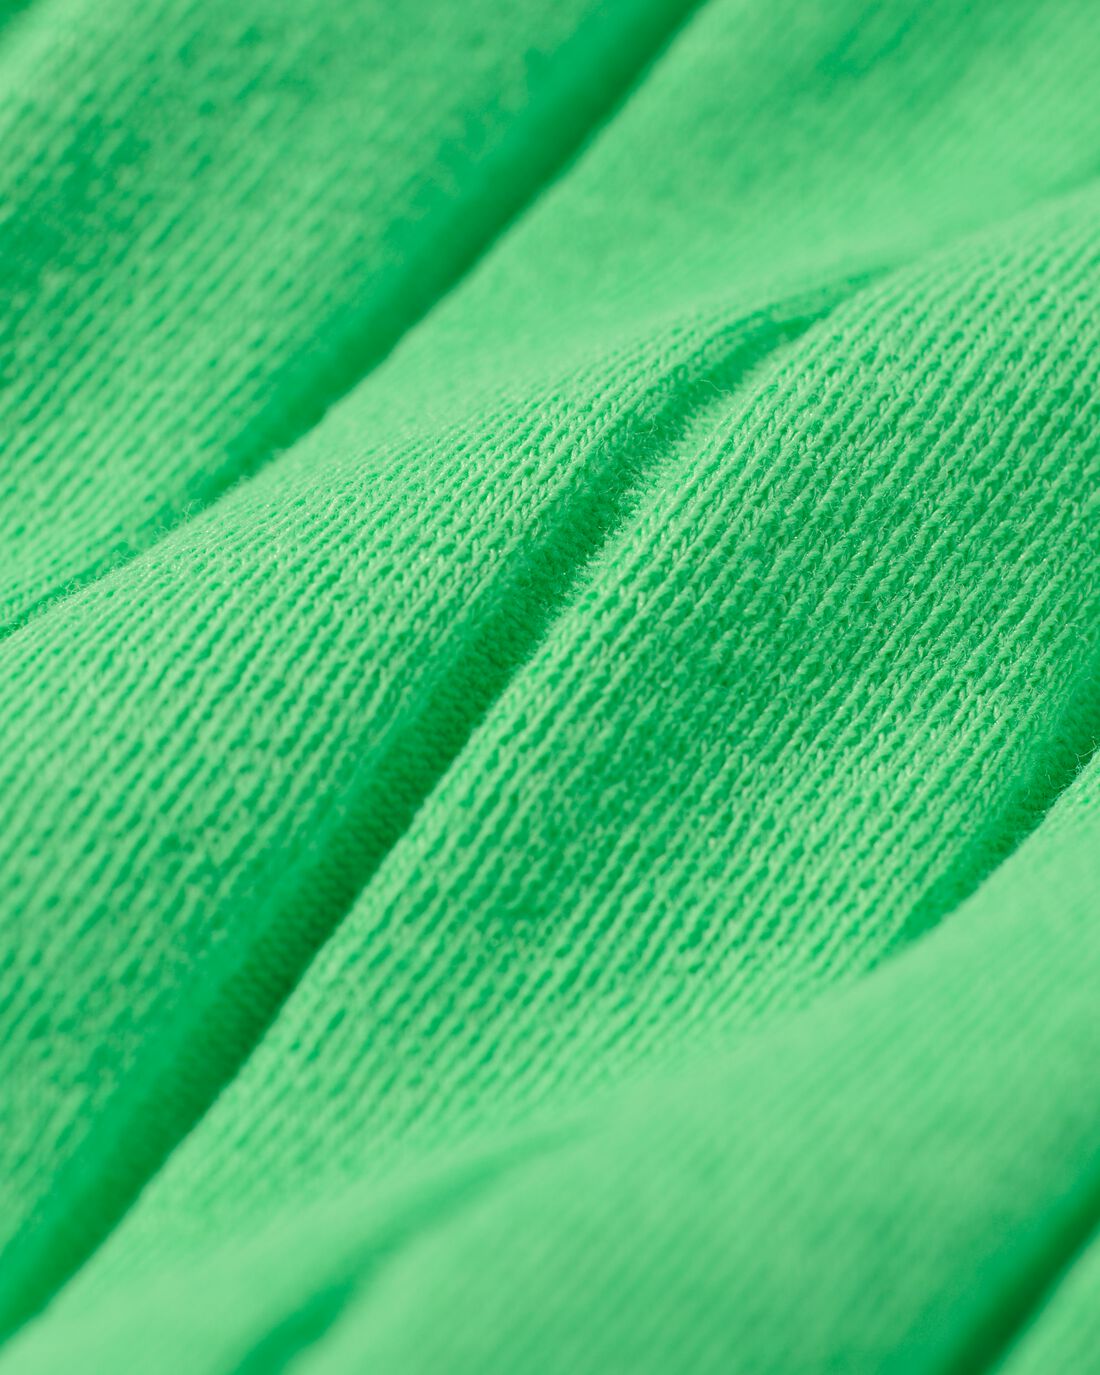 HEMA Kinder T-shirt Met Ribbels Groen (groen)